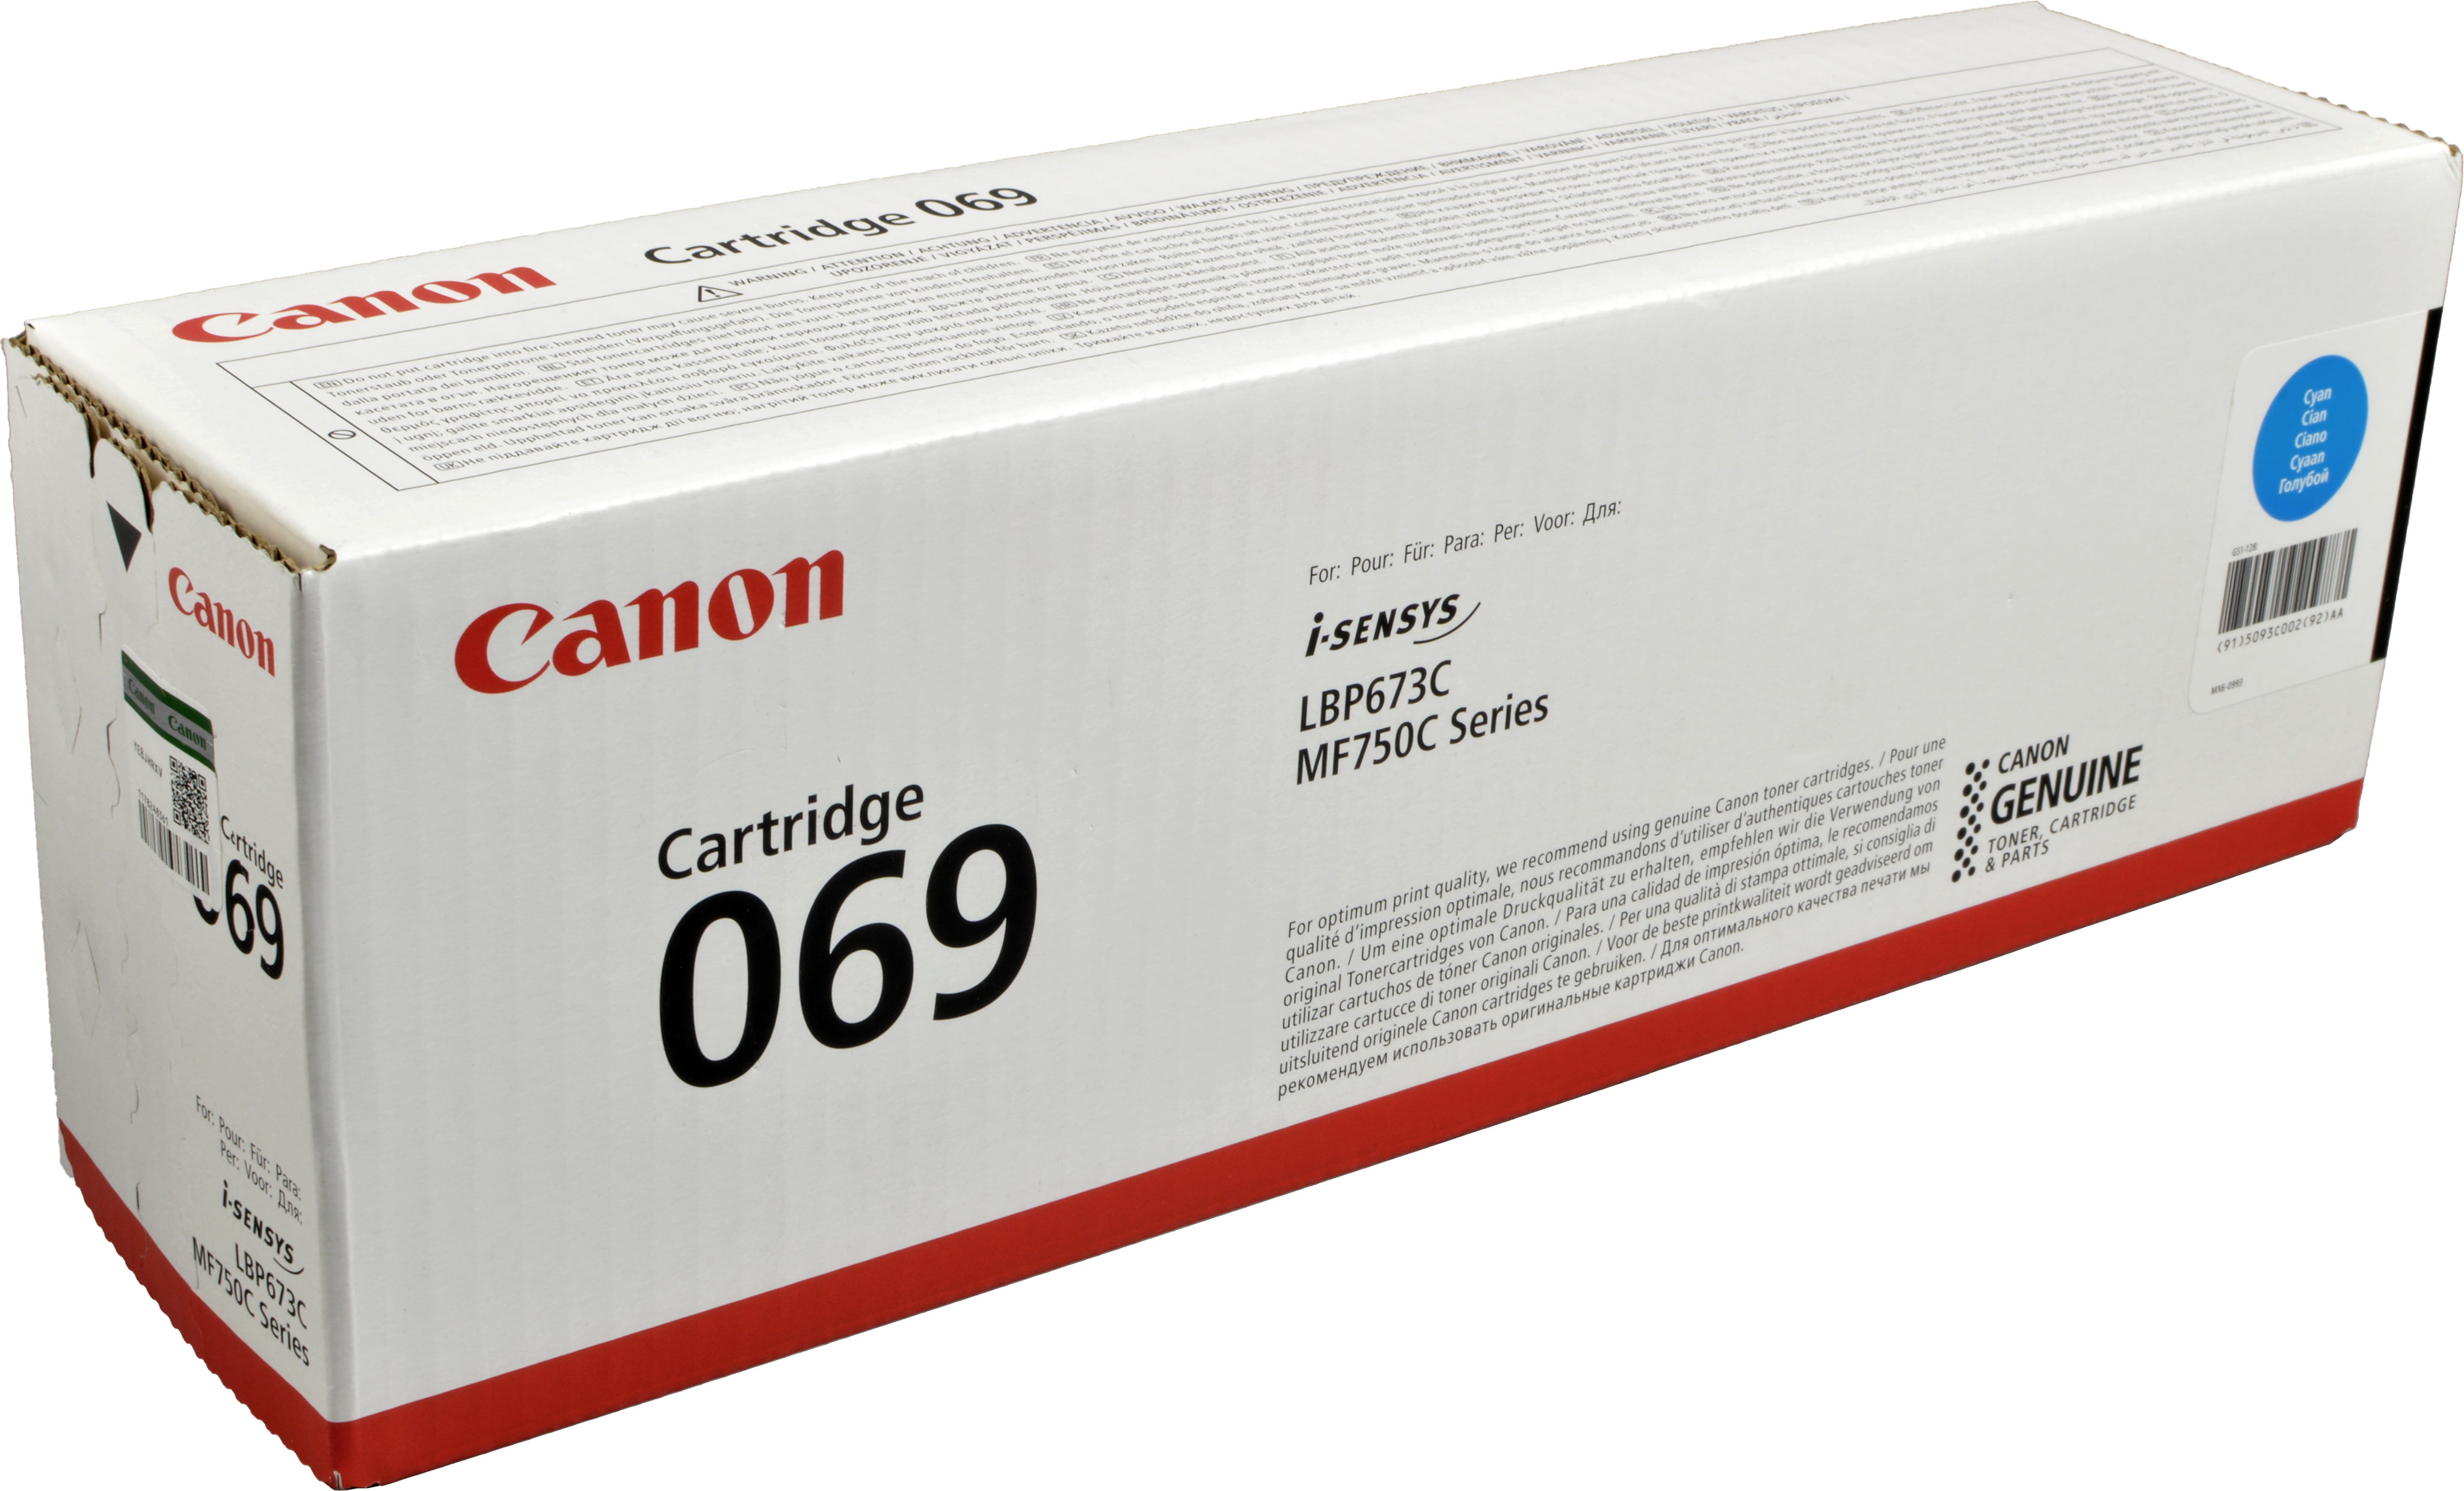 Canon Toner 5093C002  069  cyan